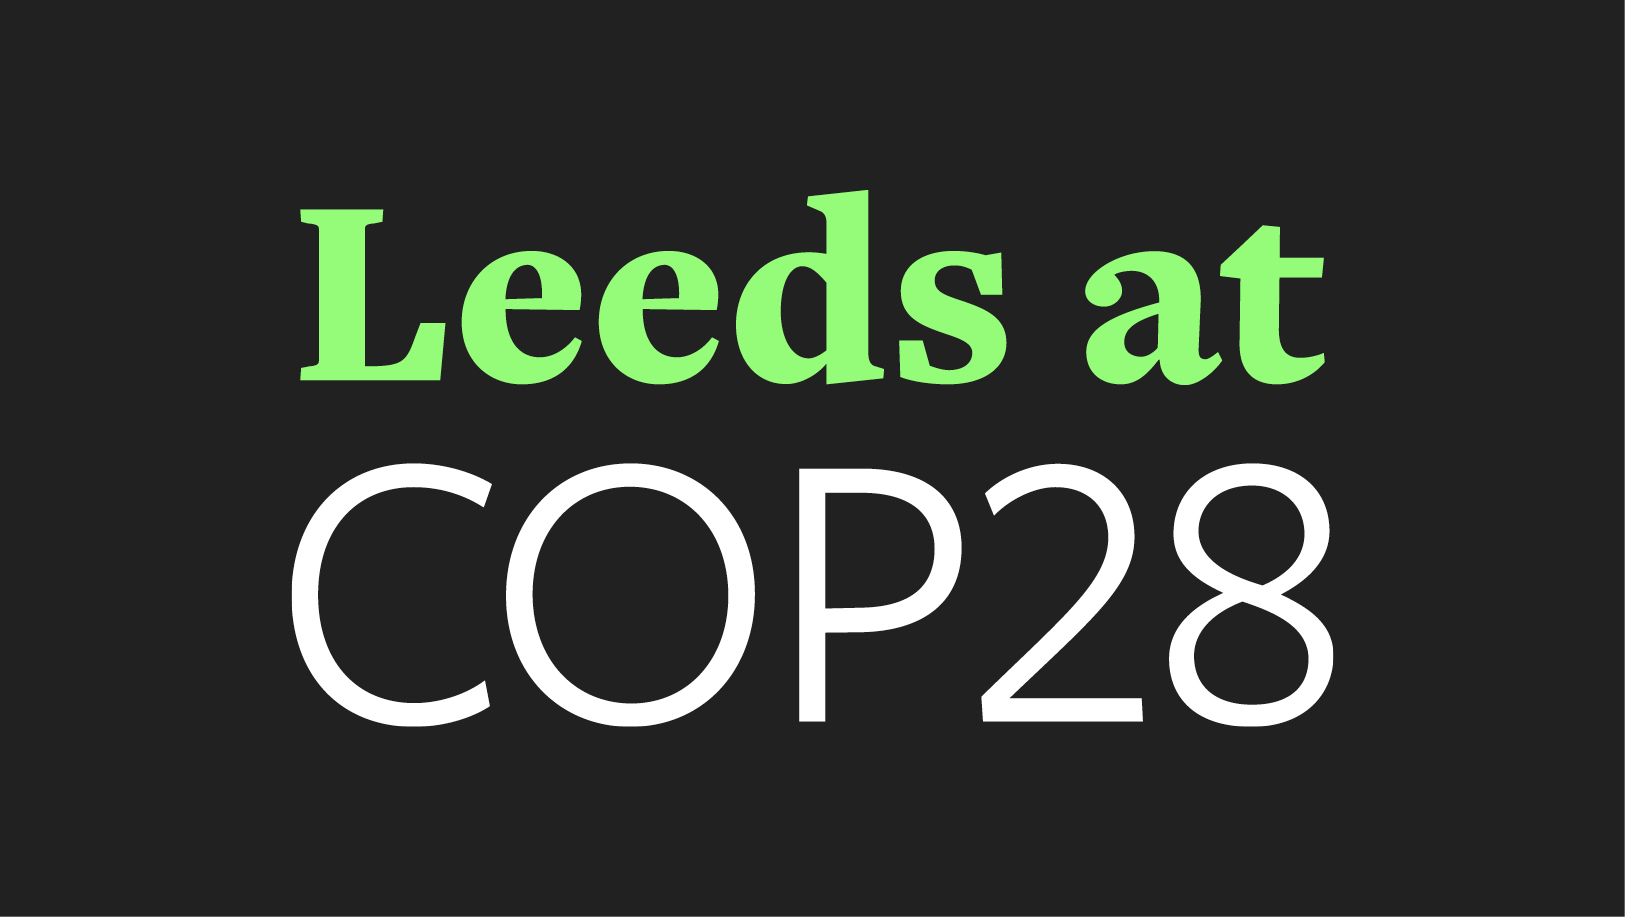 University of Leeds at COP28: Meet the delegation